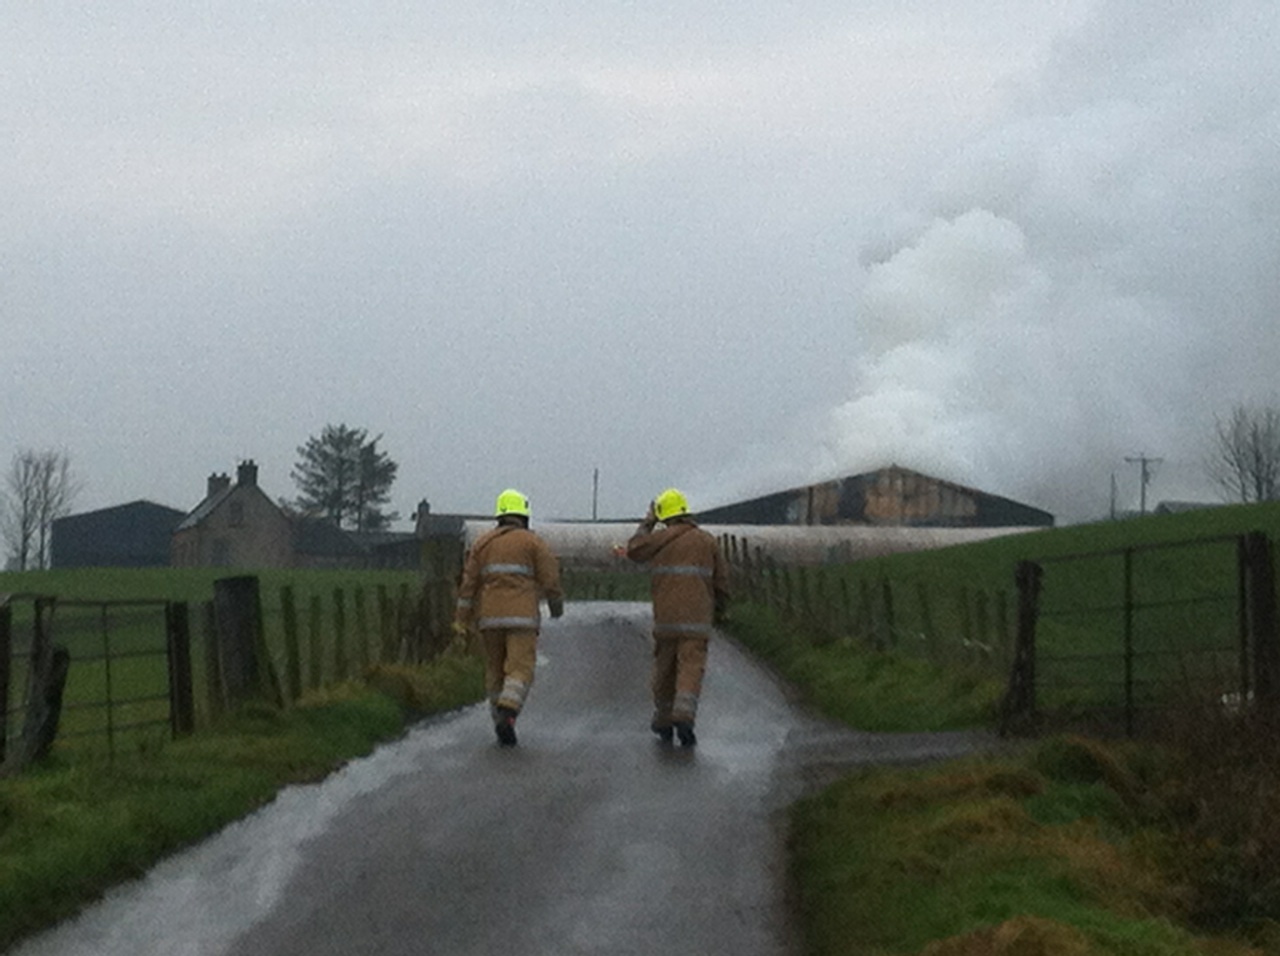 Firefighters on scene at Allenbuie Farm, near Keith